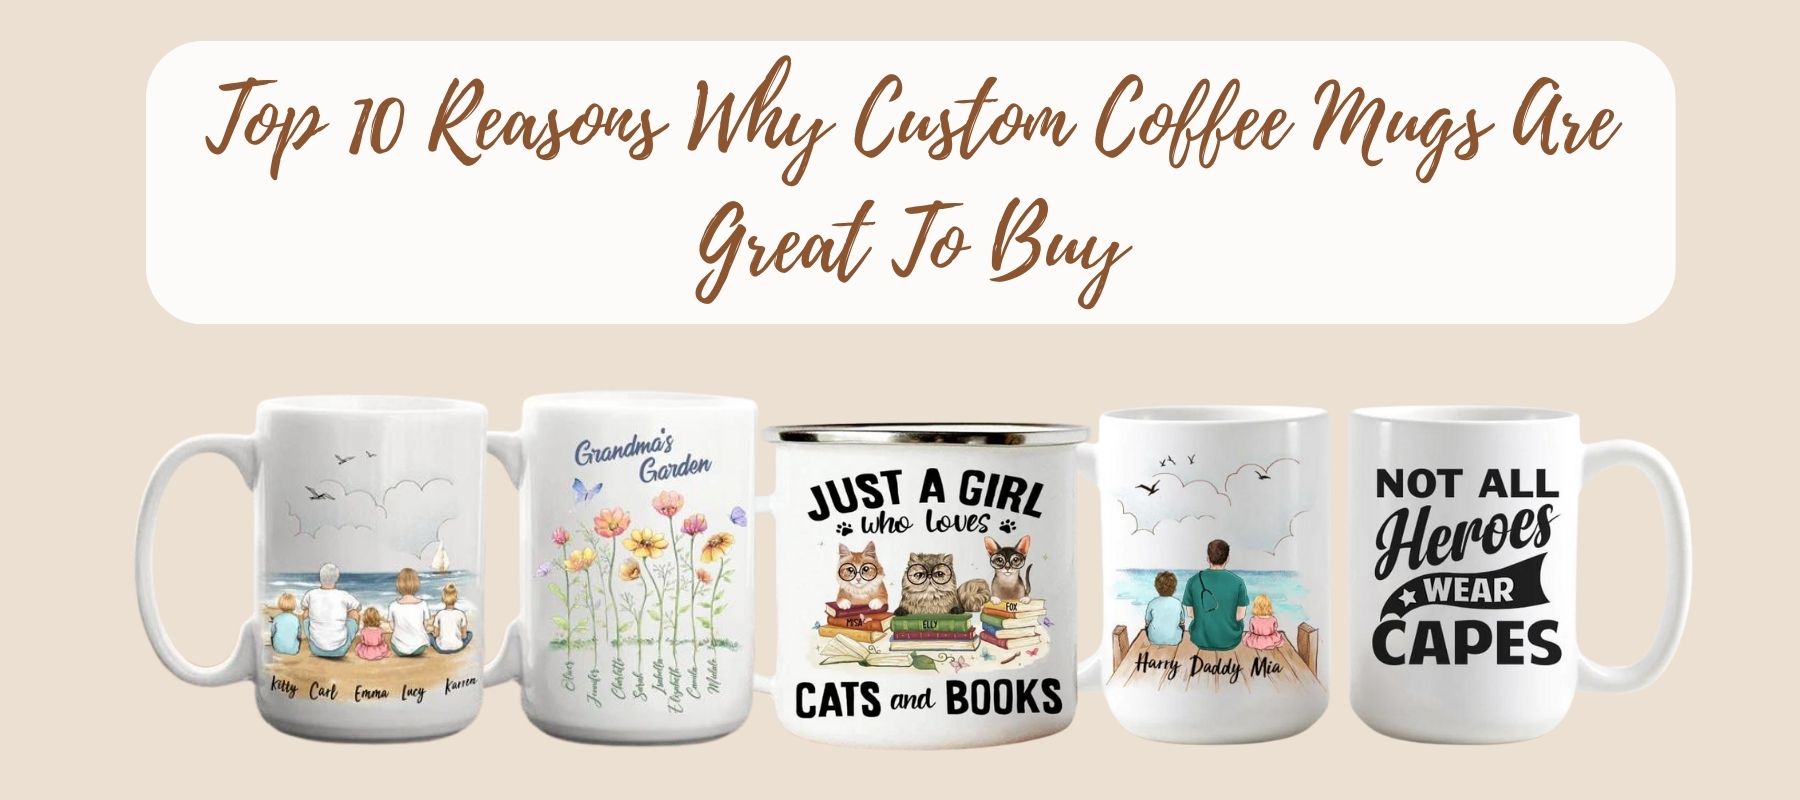 How to make Customized Mugs